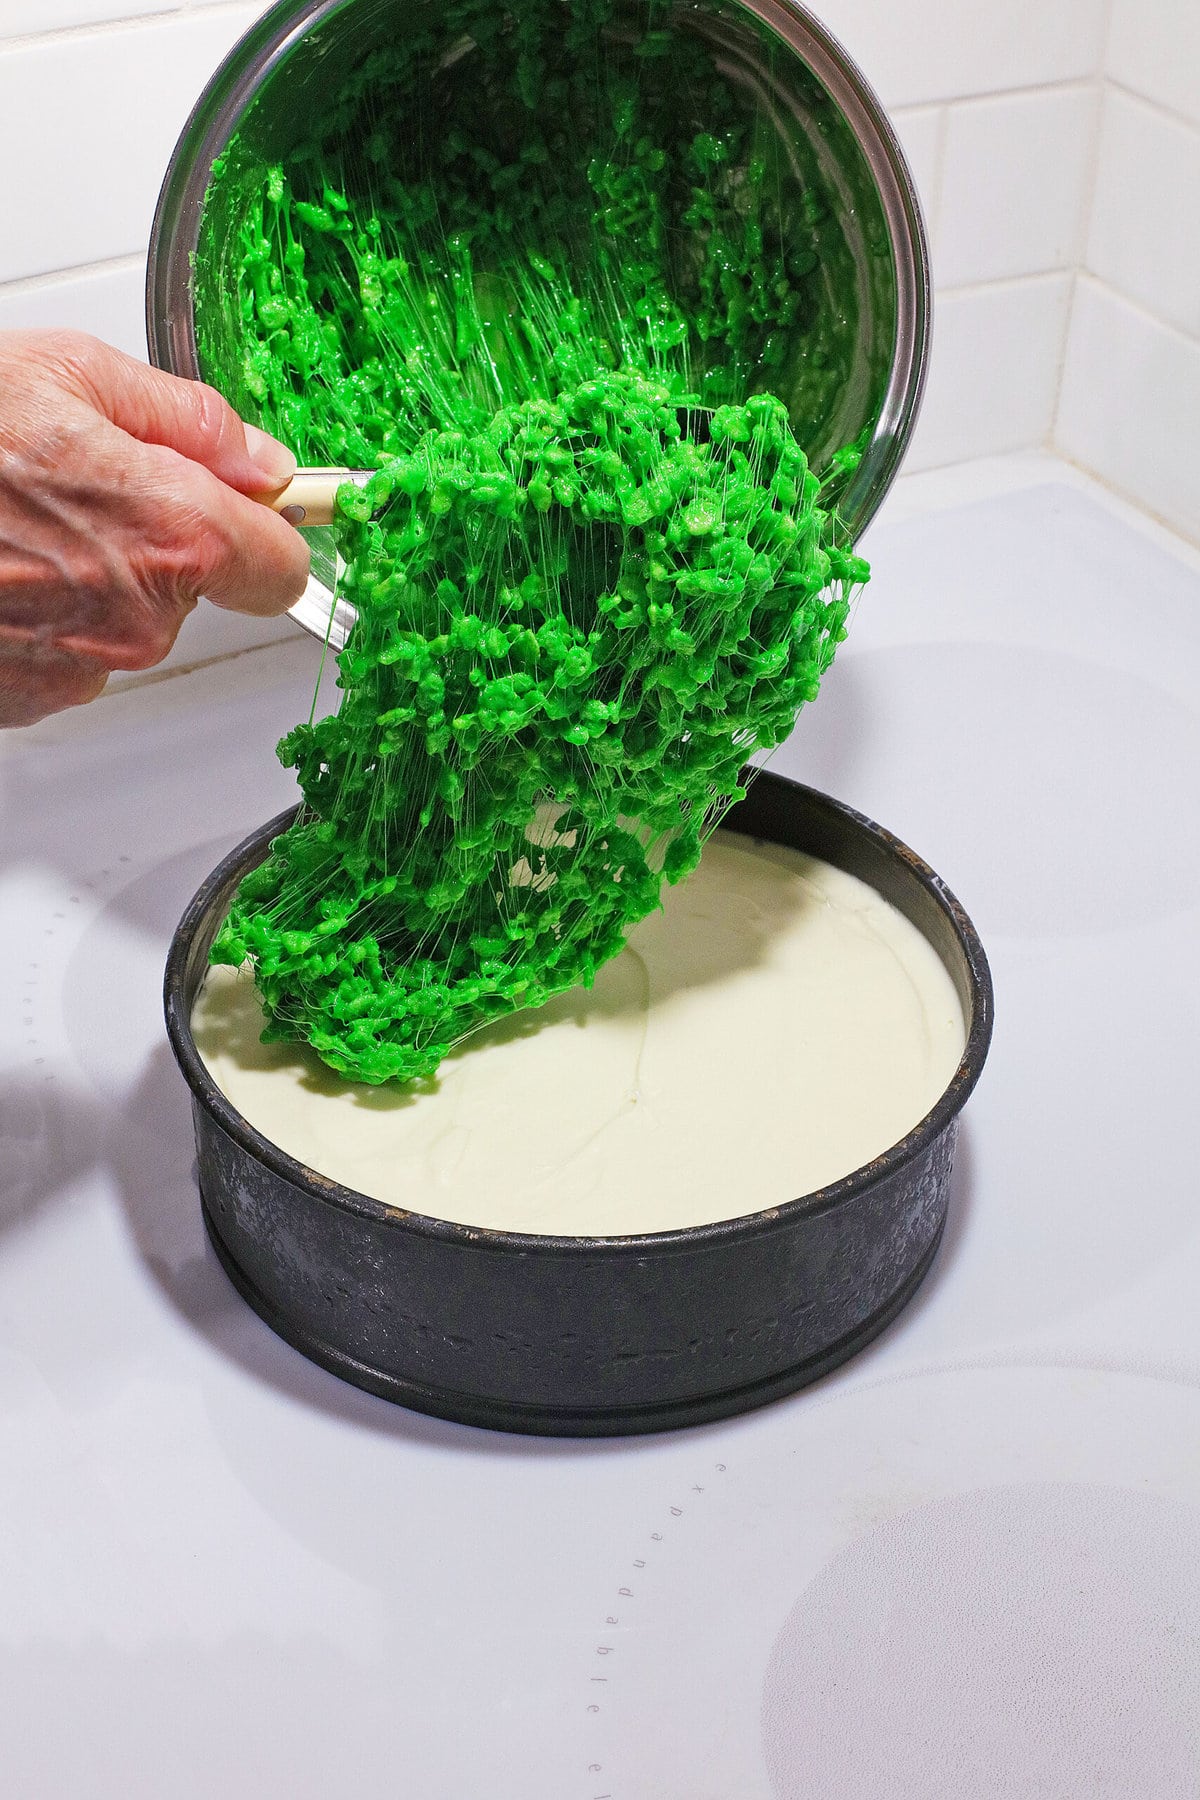 Adding the green crust layer.